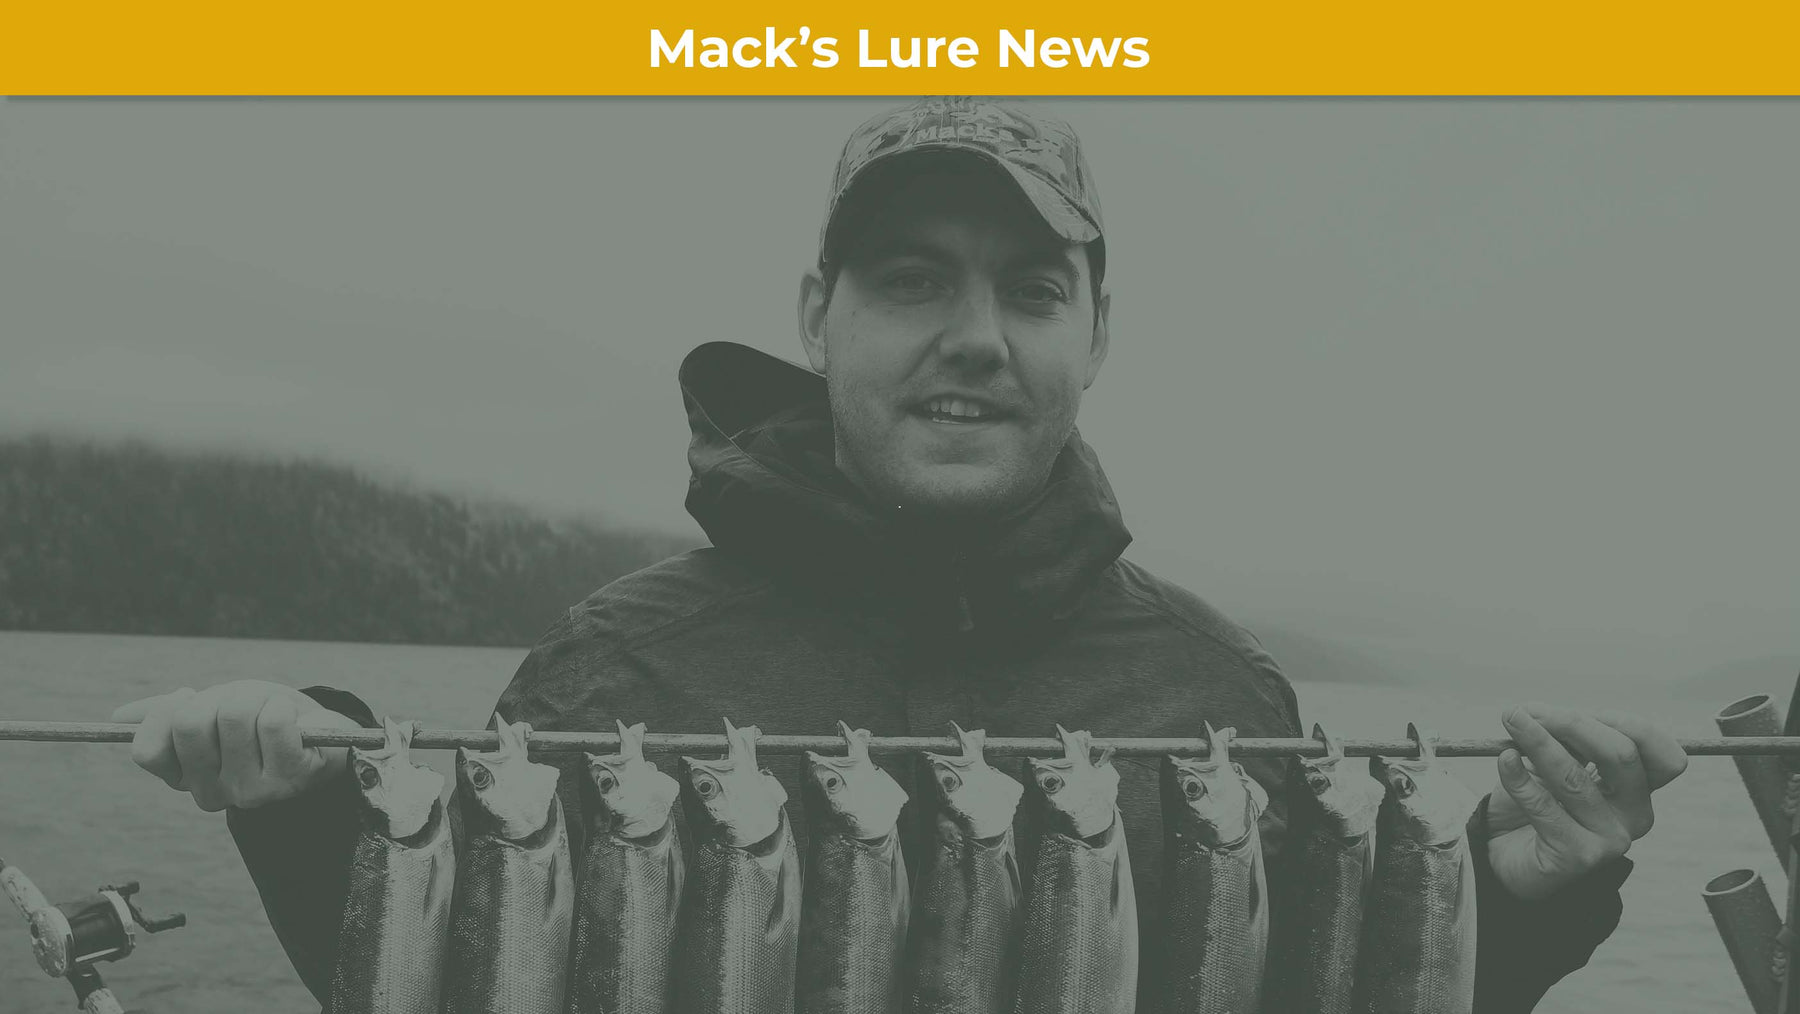 Mack's Lure, Inc. Adds Digital Technology Coordinator